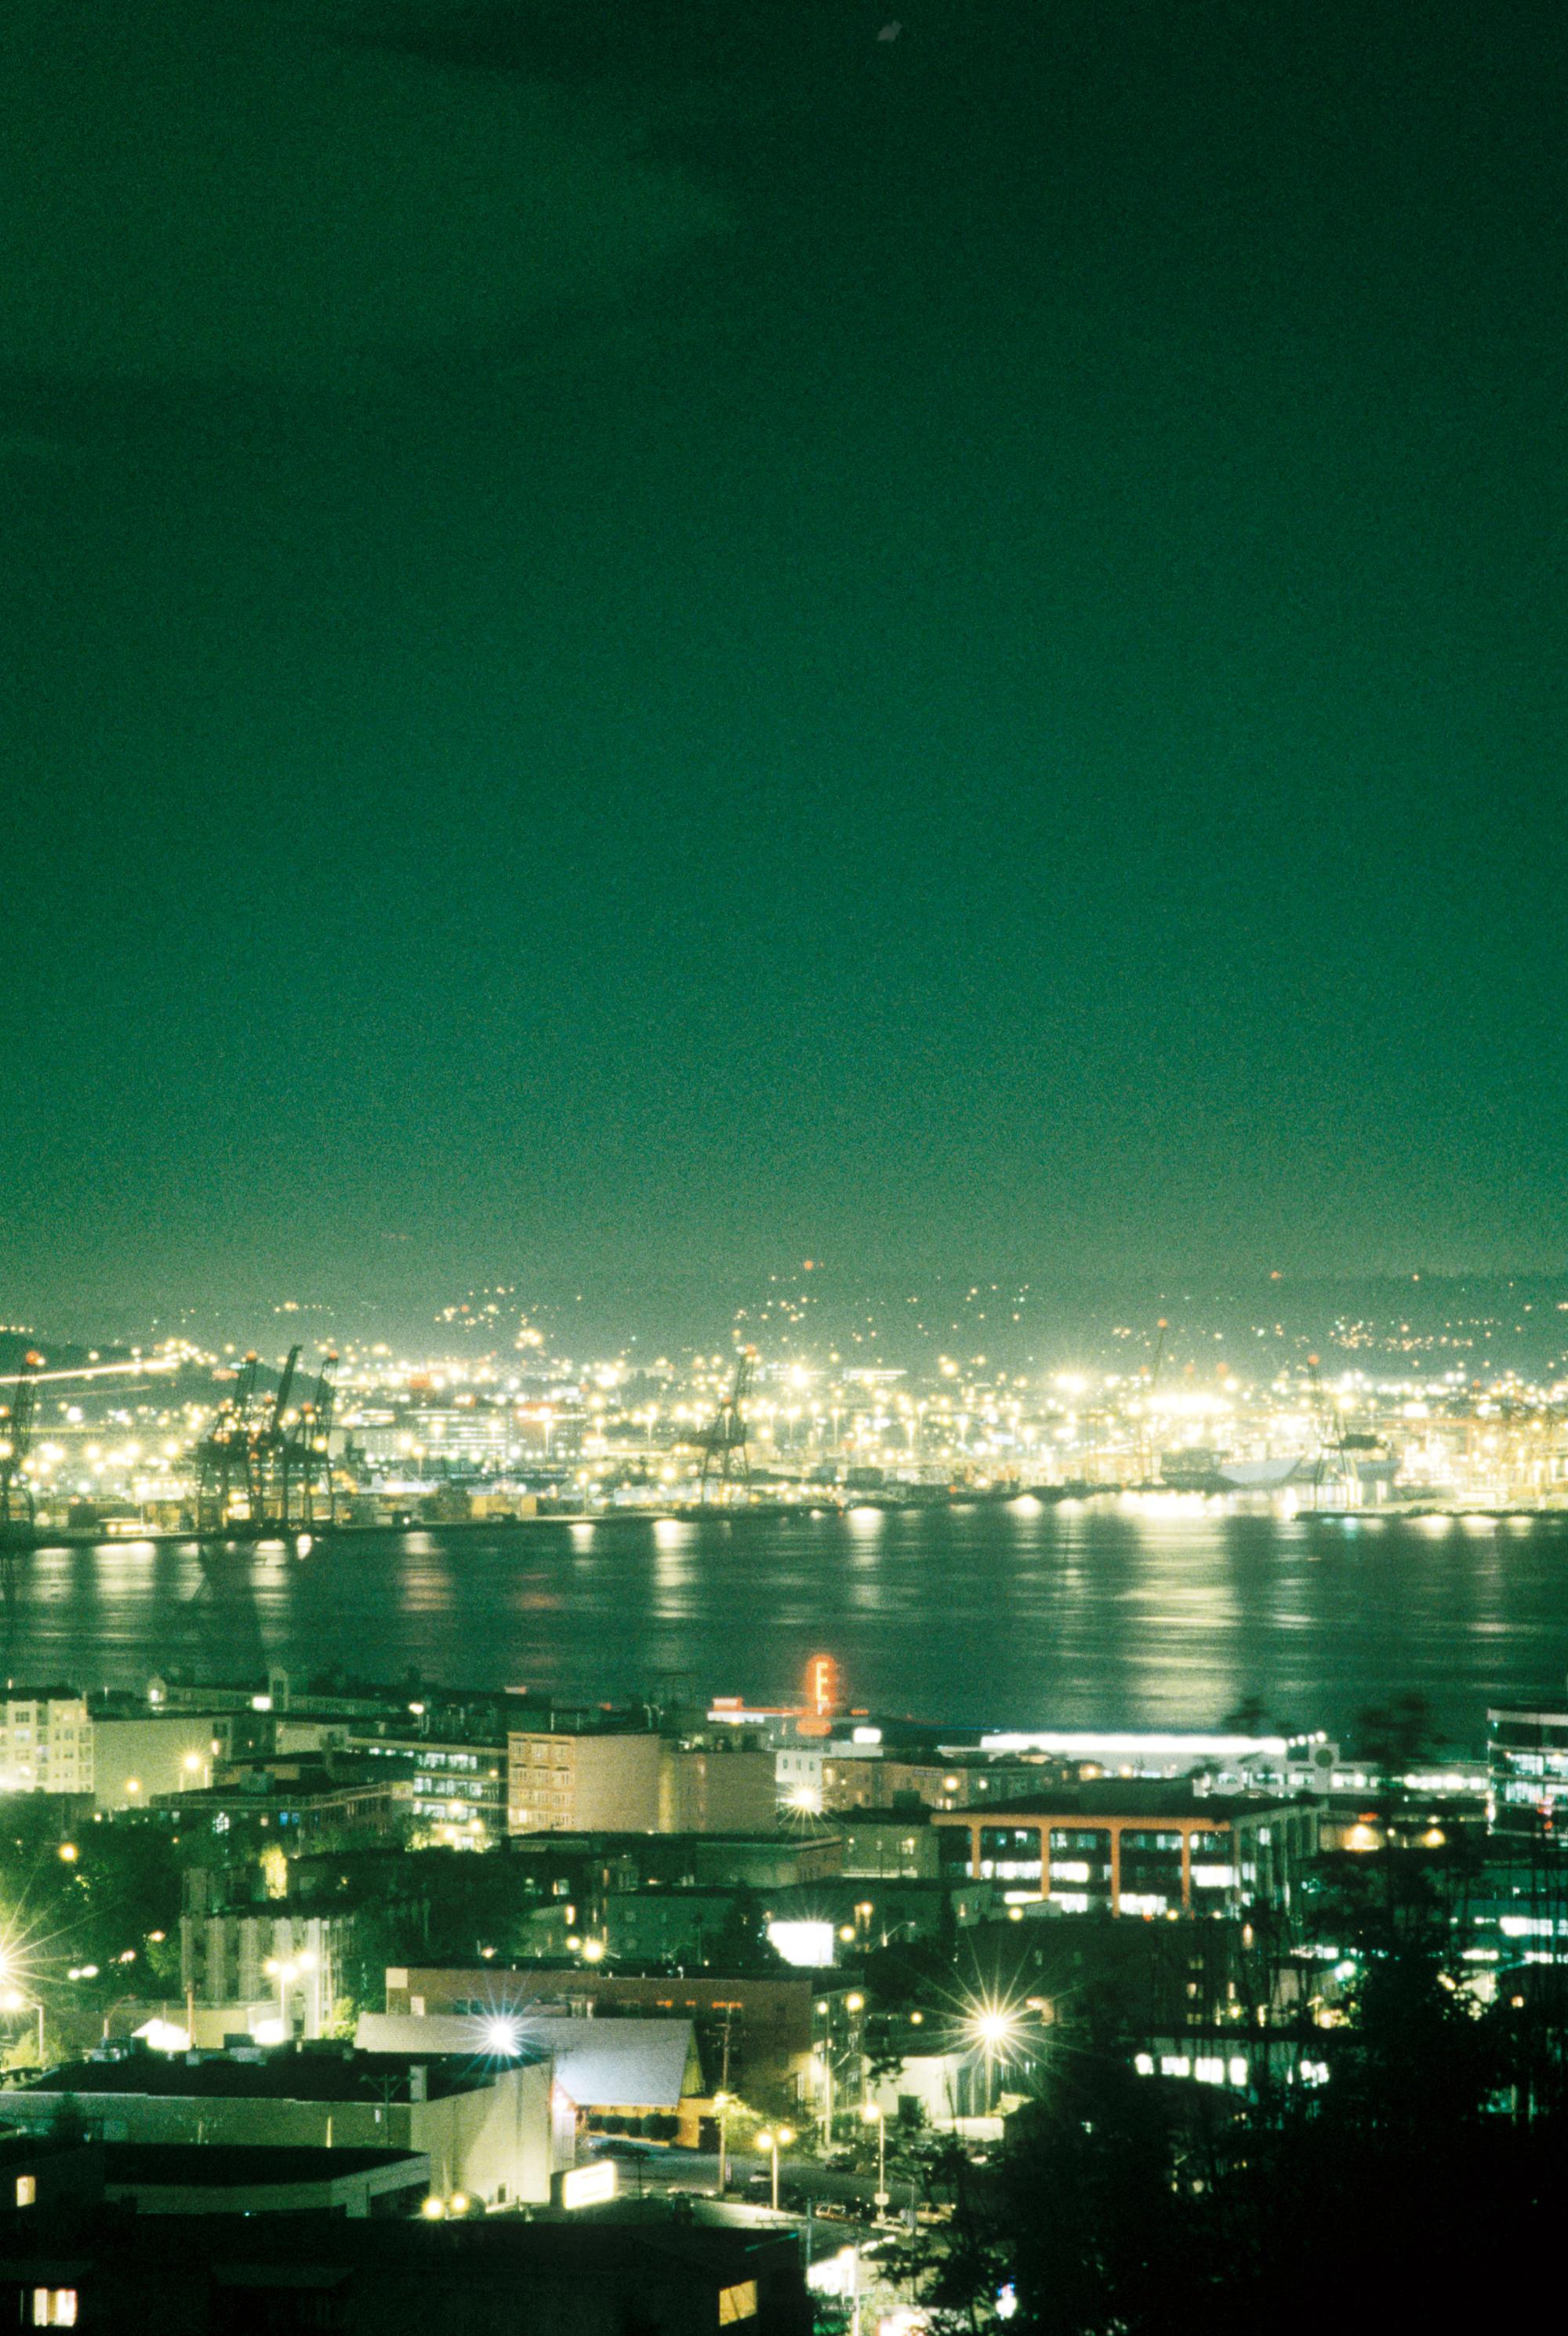 Seattle (1994) - Harbor Island